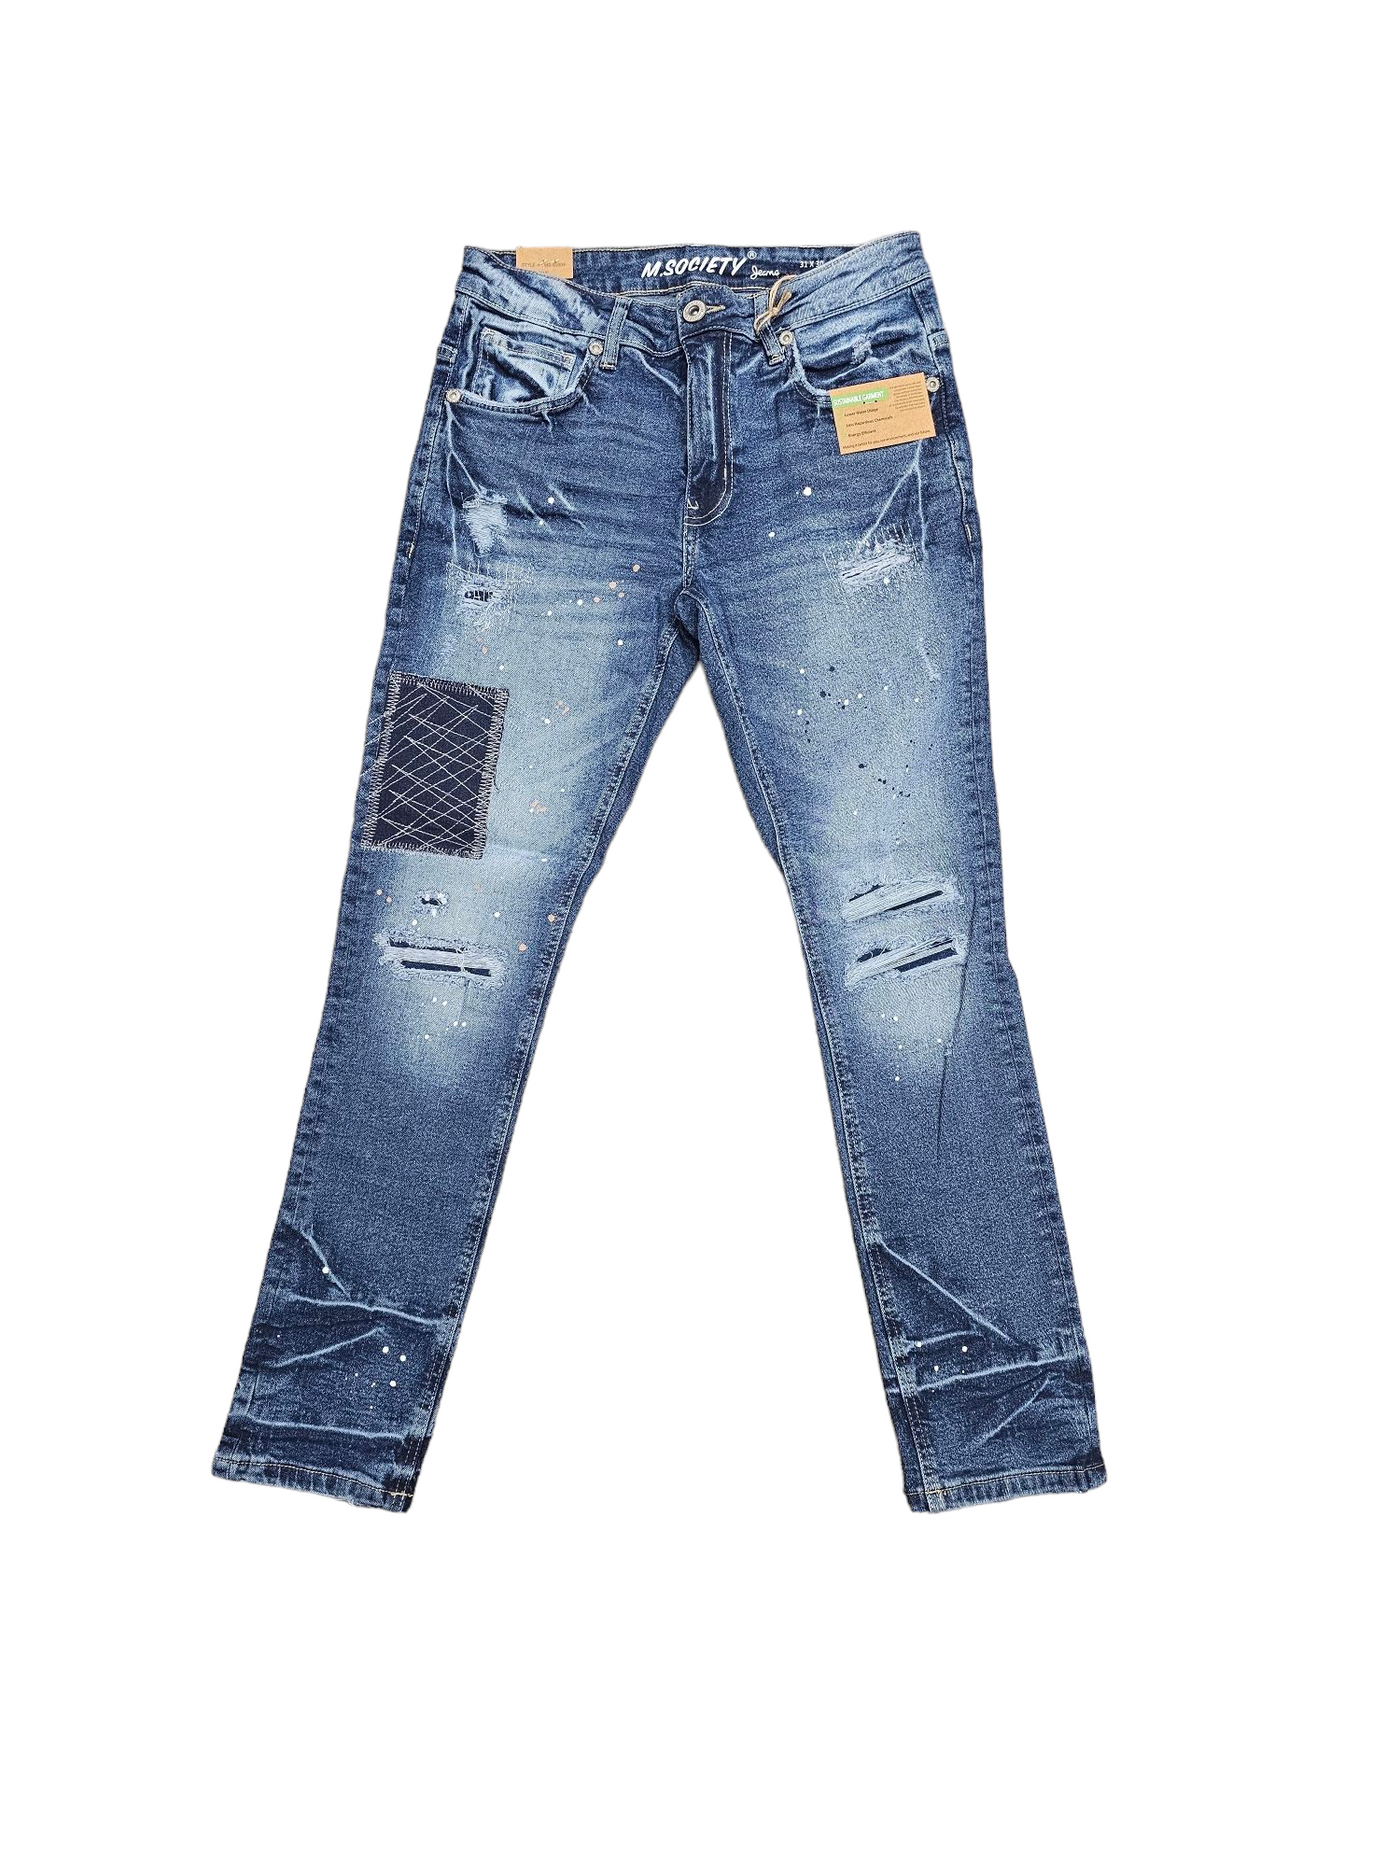 M. Society Men's Stretched Denim Jeans Blue MS-80309